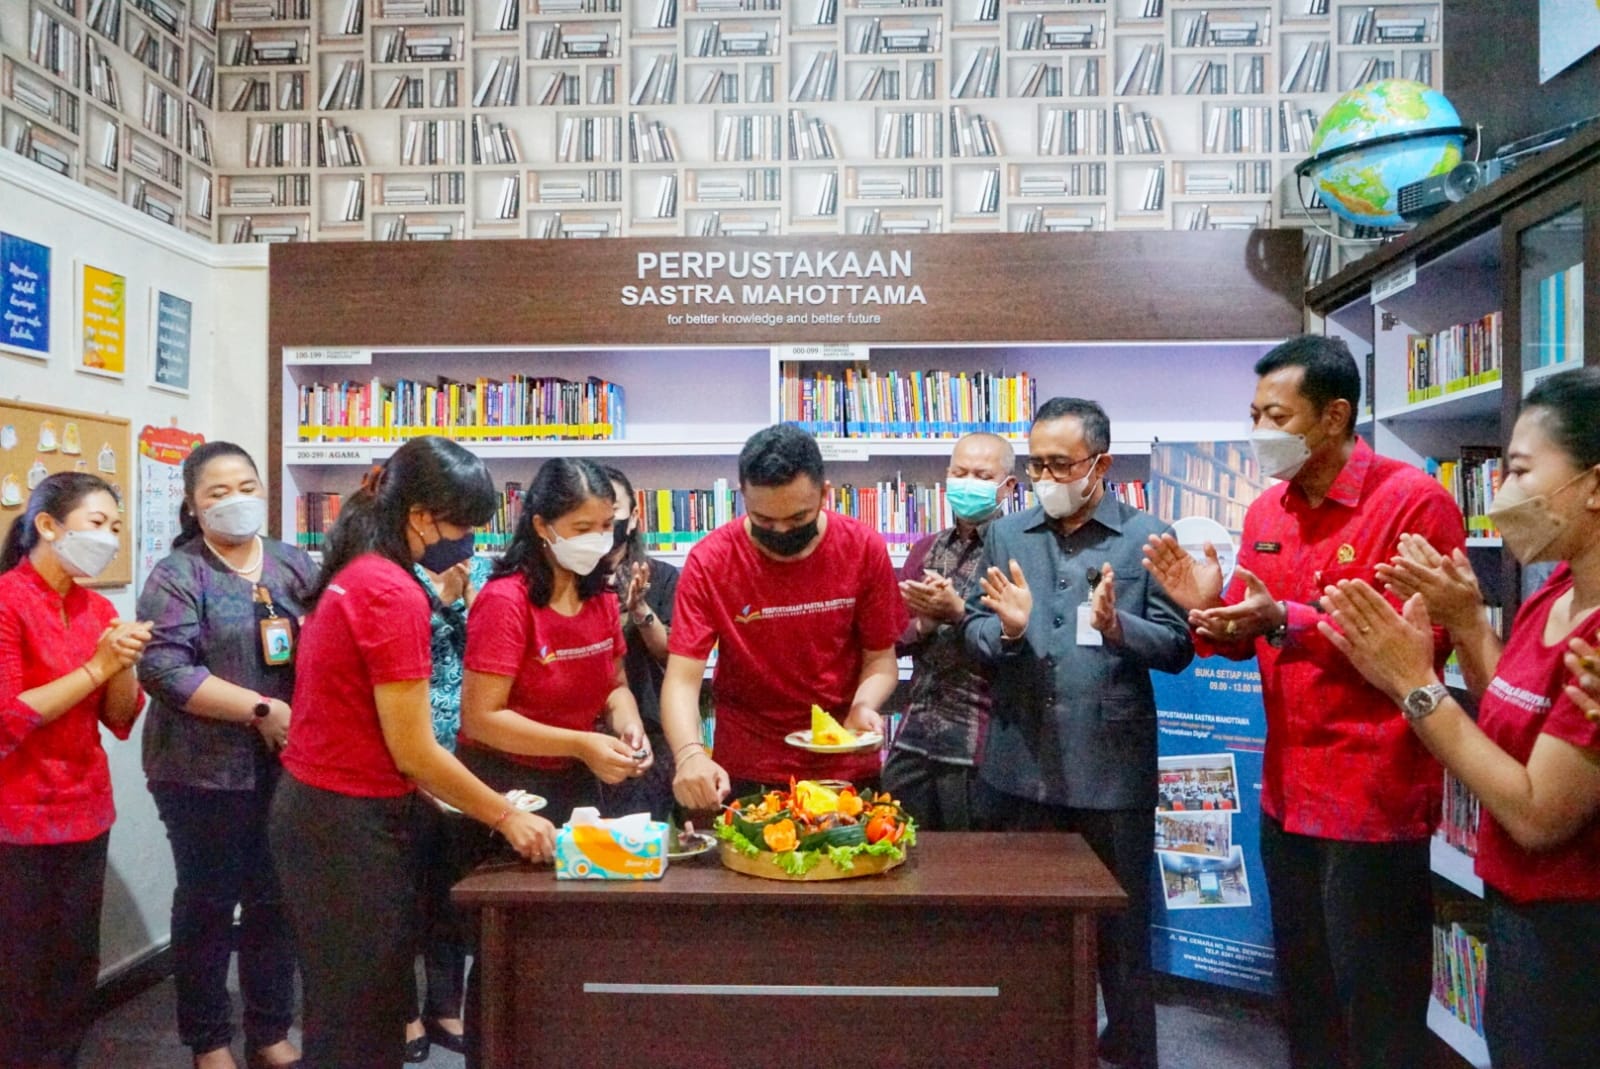 Satu Tahun Perjalanan Perpustakaan Sastra Mahottama, Dirayakan dengan Sederhana dan Dihadiri oleh Walikota Denpasar